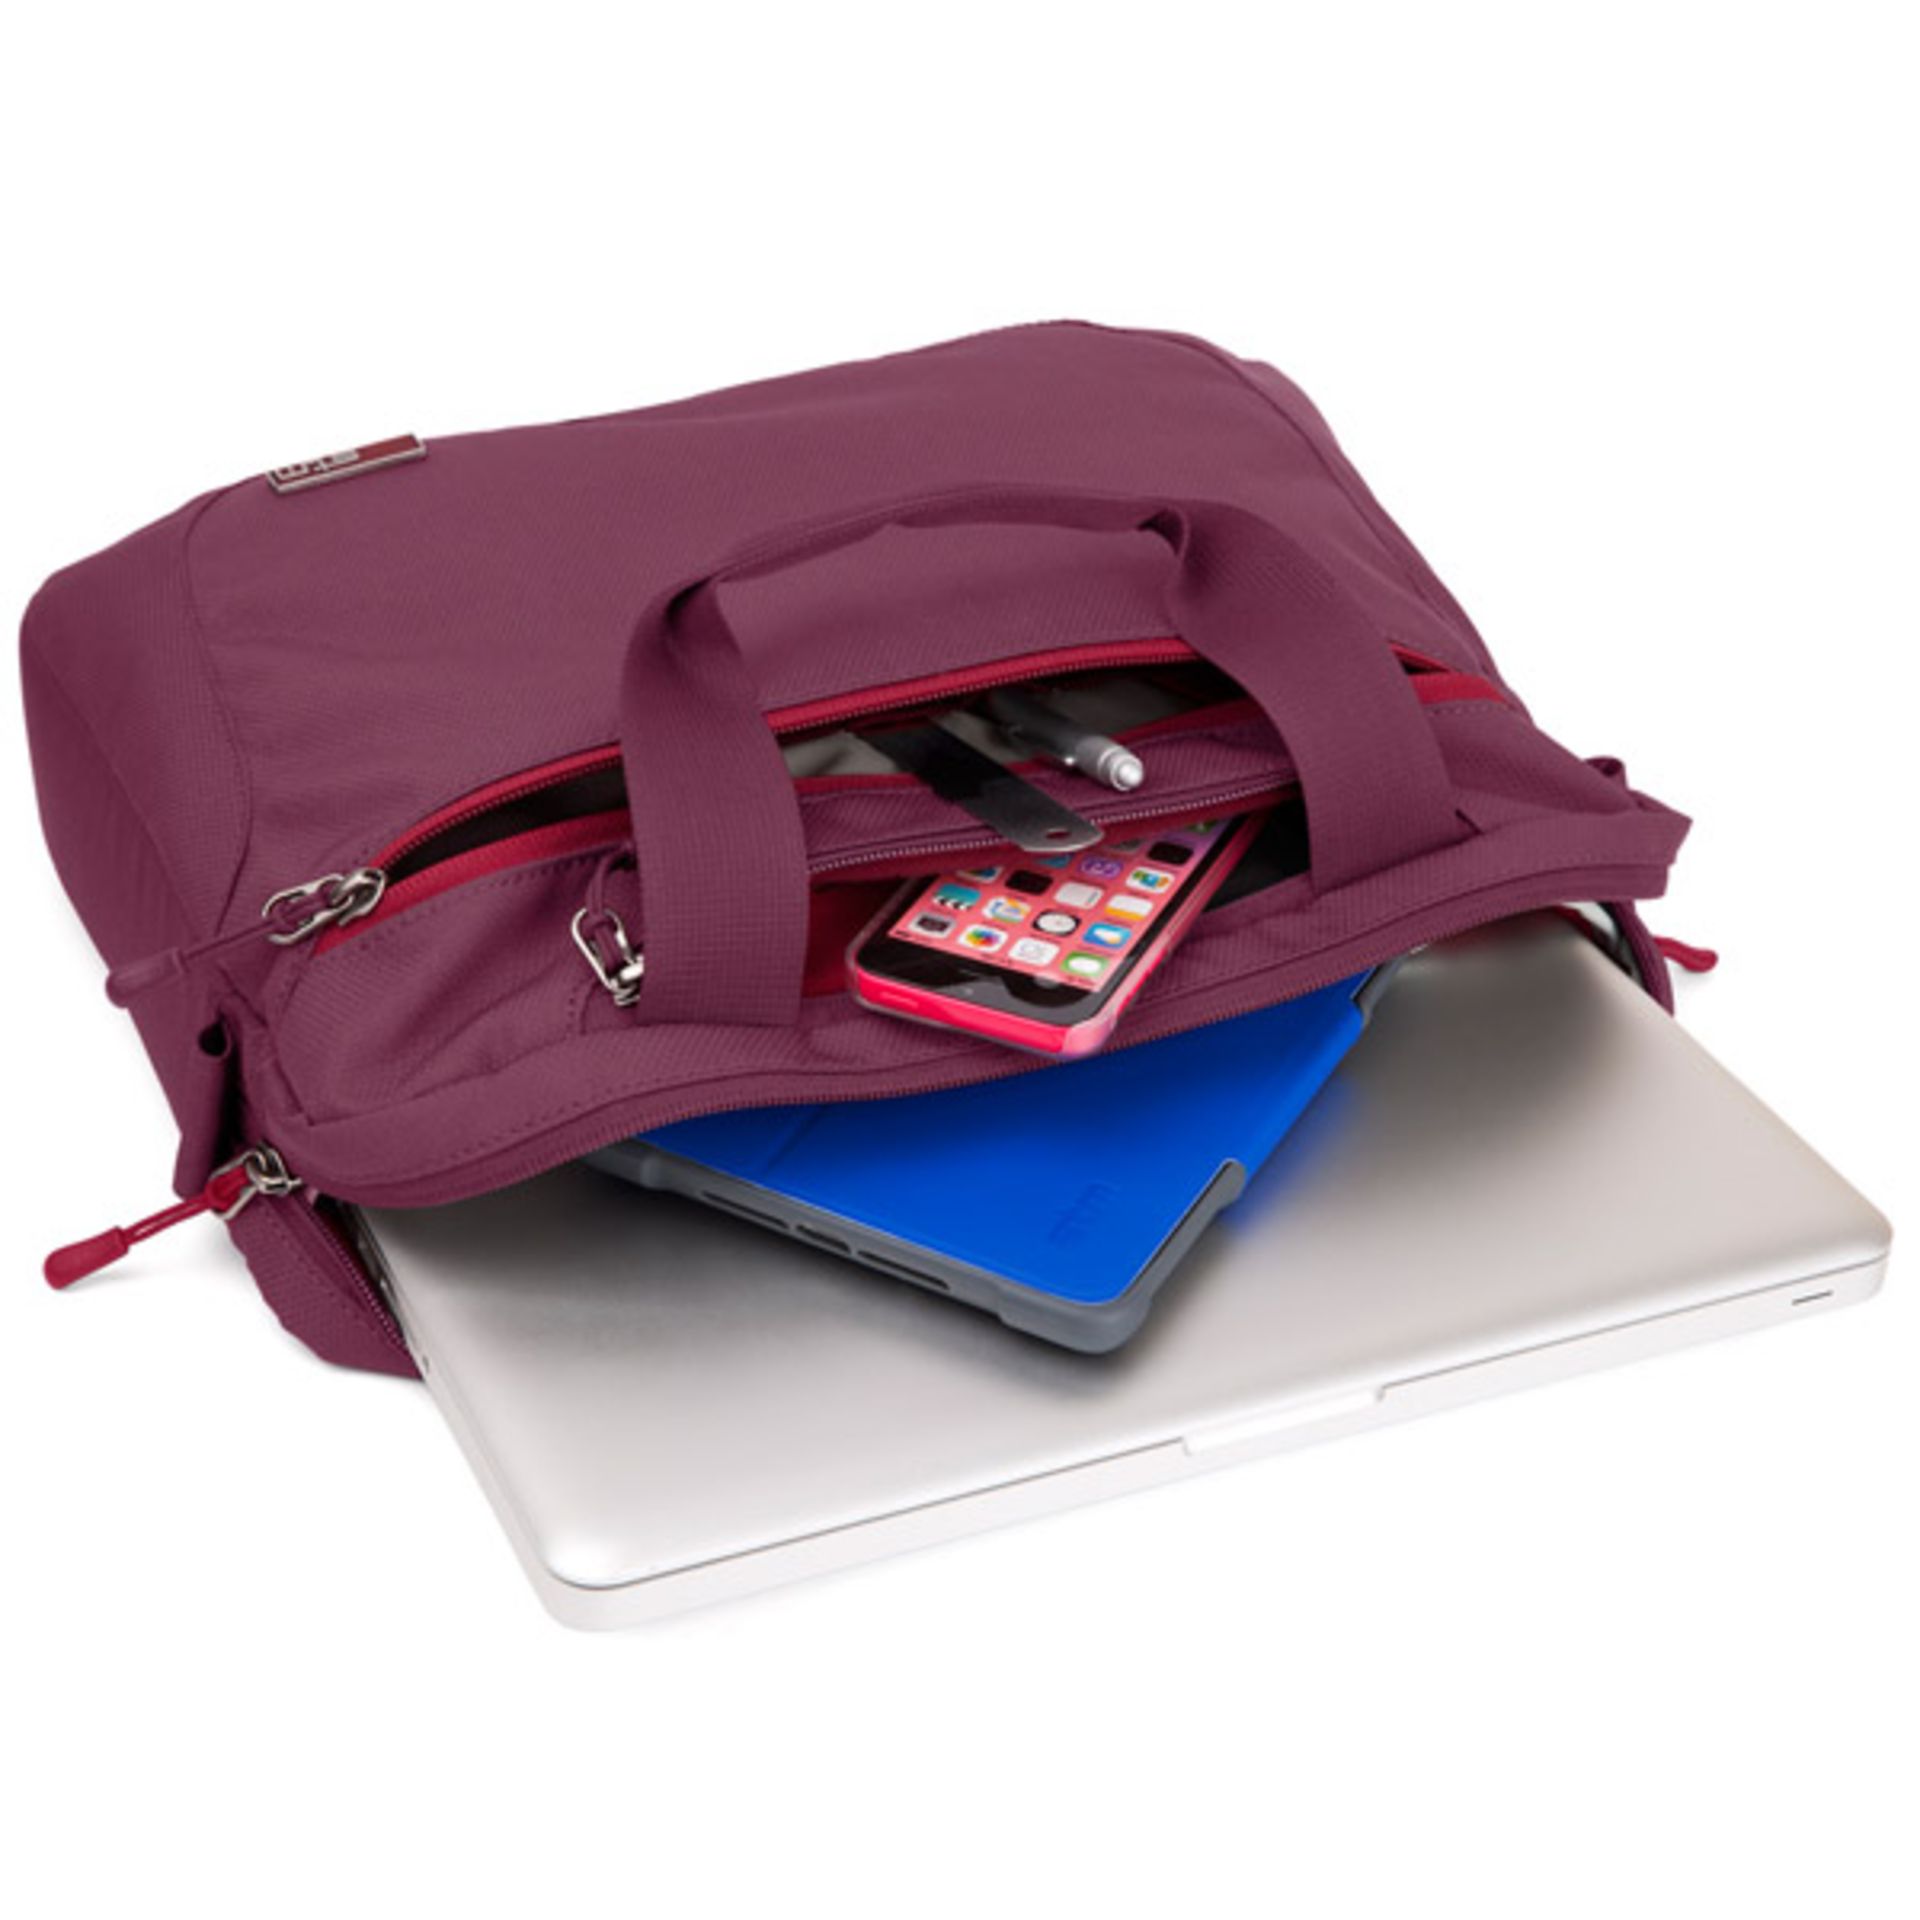 + VAT Brand New STM Swift Medium Shoulder Bag - RRP £42.99 Amazon Price £33.57 - For Laptop/Tablet